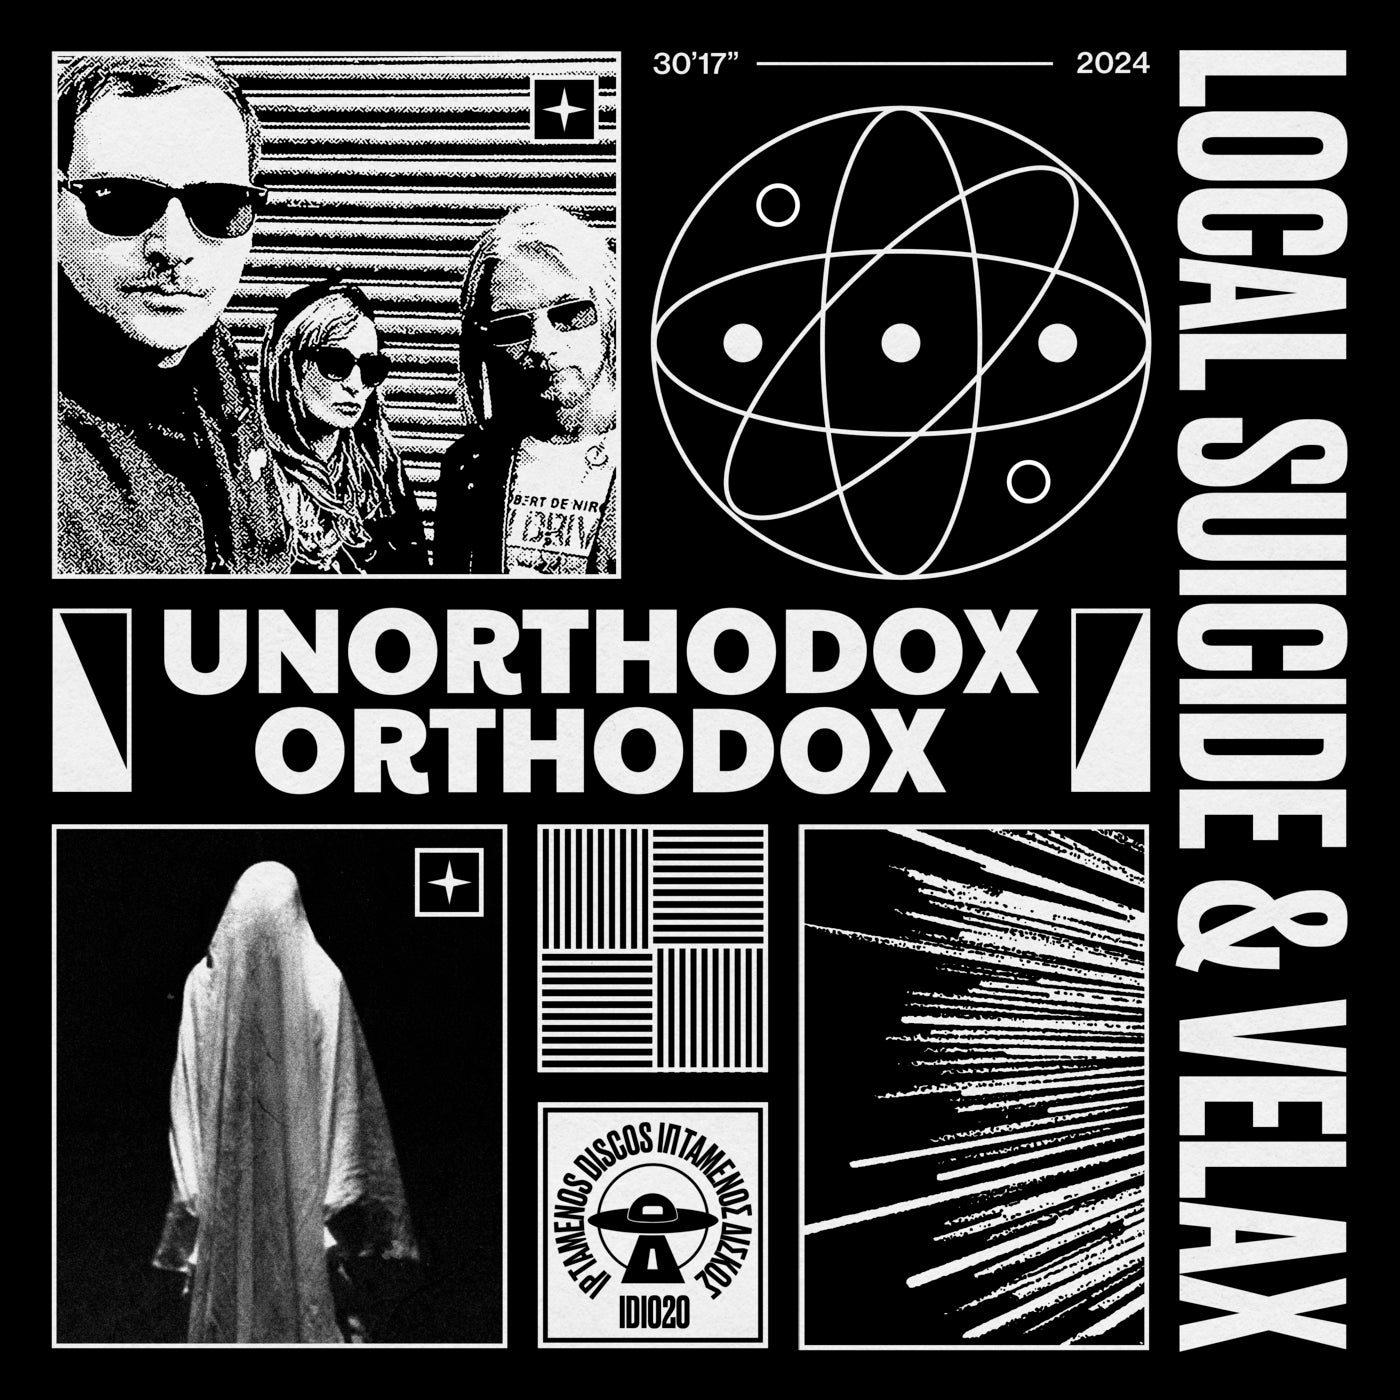 Unorthodox Orthodox